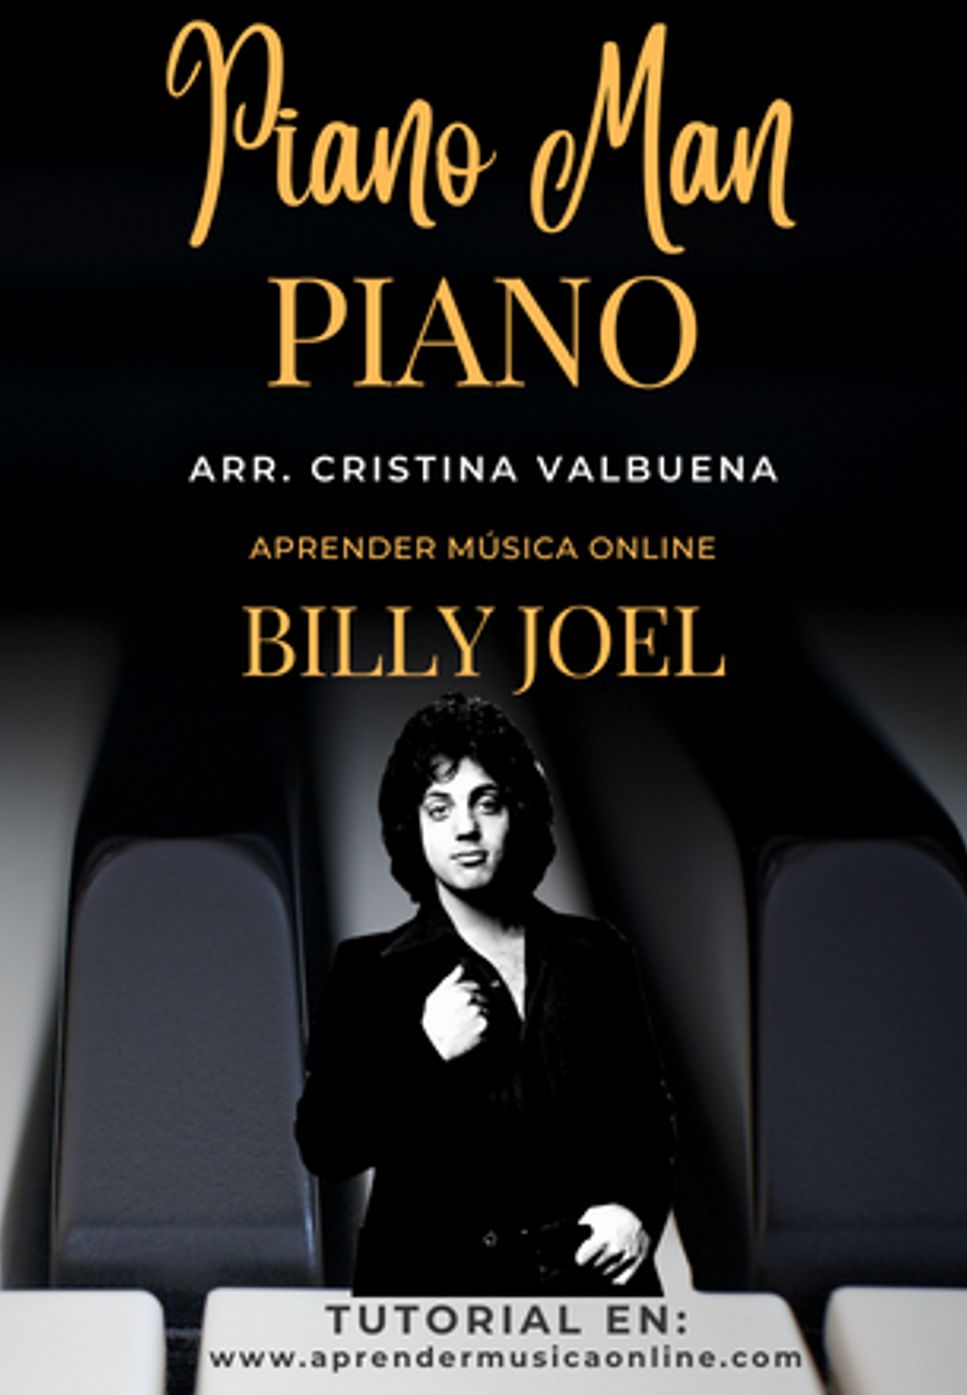 Billy Joel - The Piano Man by Cristina Valbuena